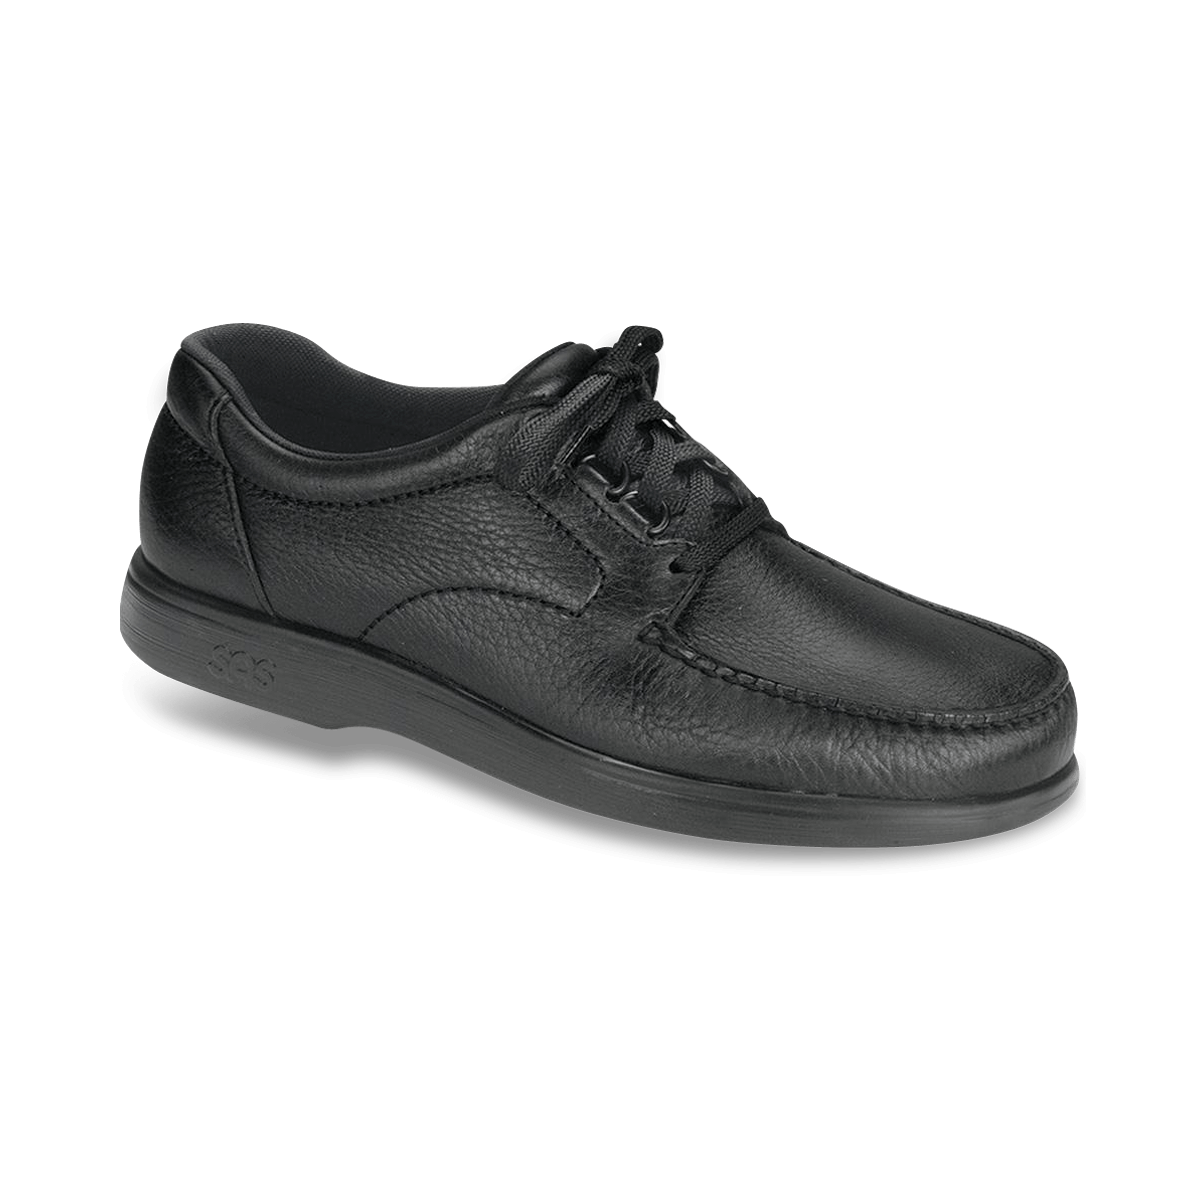 'Bout Time Black | SAS Shoes on SASnola.com | Reviews on Judge.me